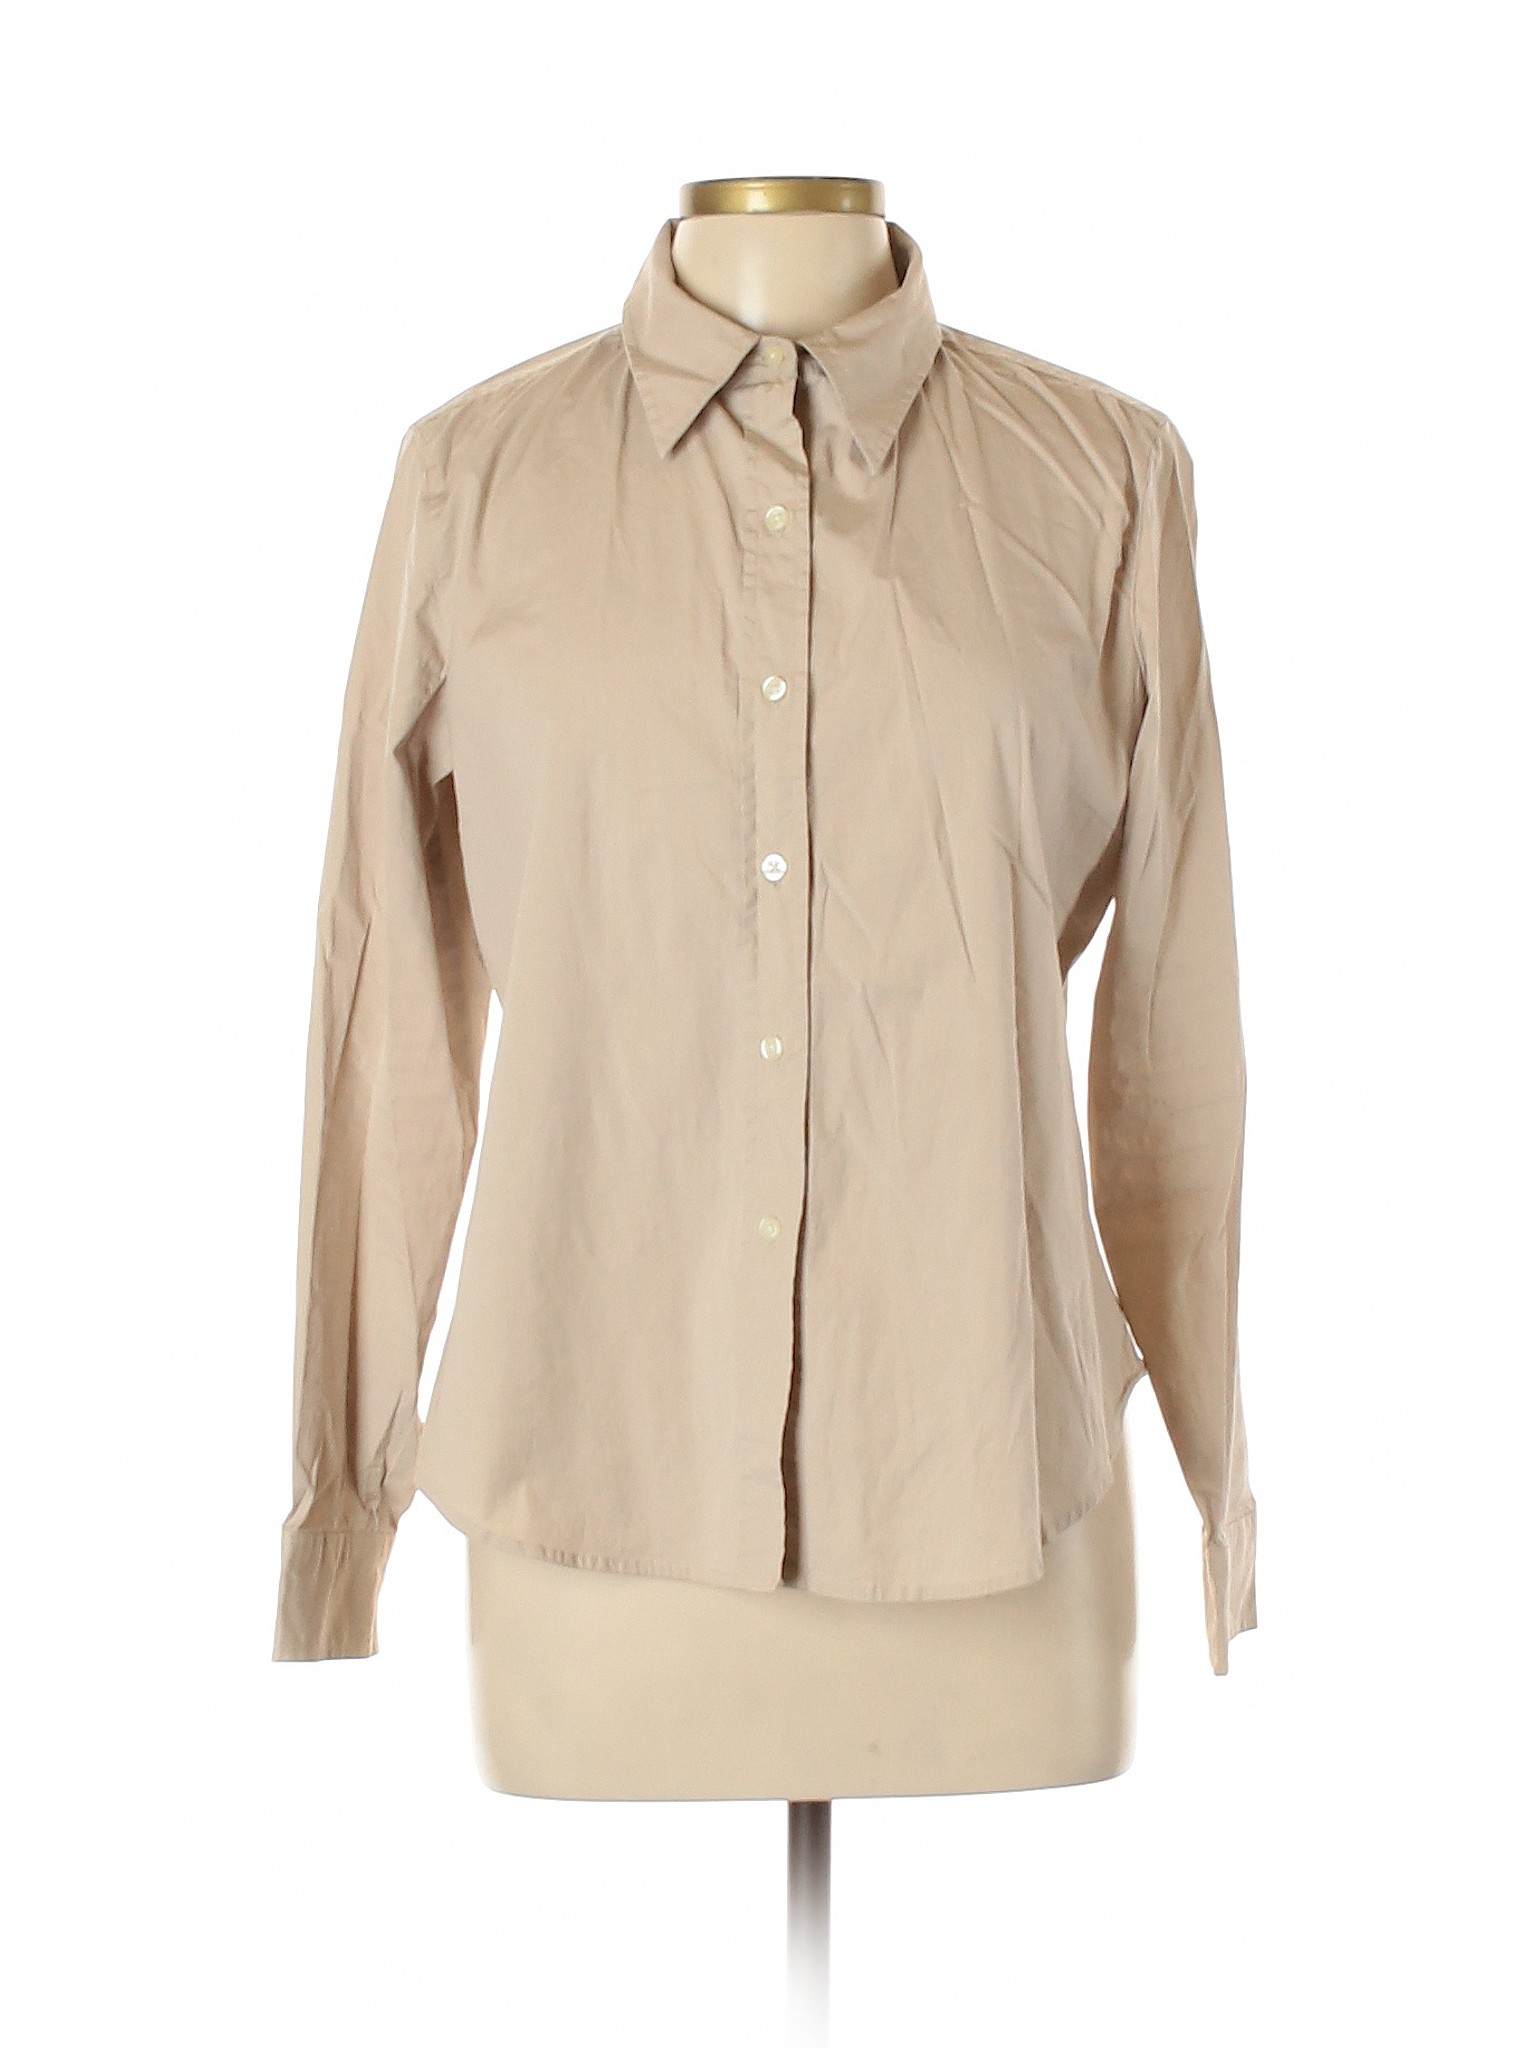 Gap Women Brown Long Sleeve Button-Down Shirt L | eBay